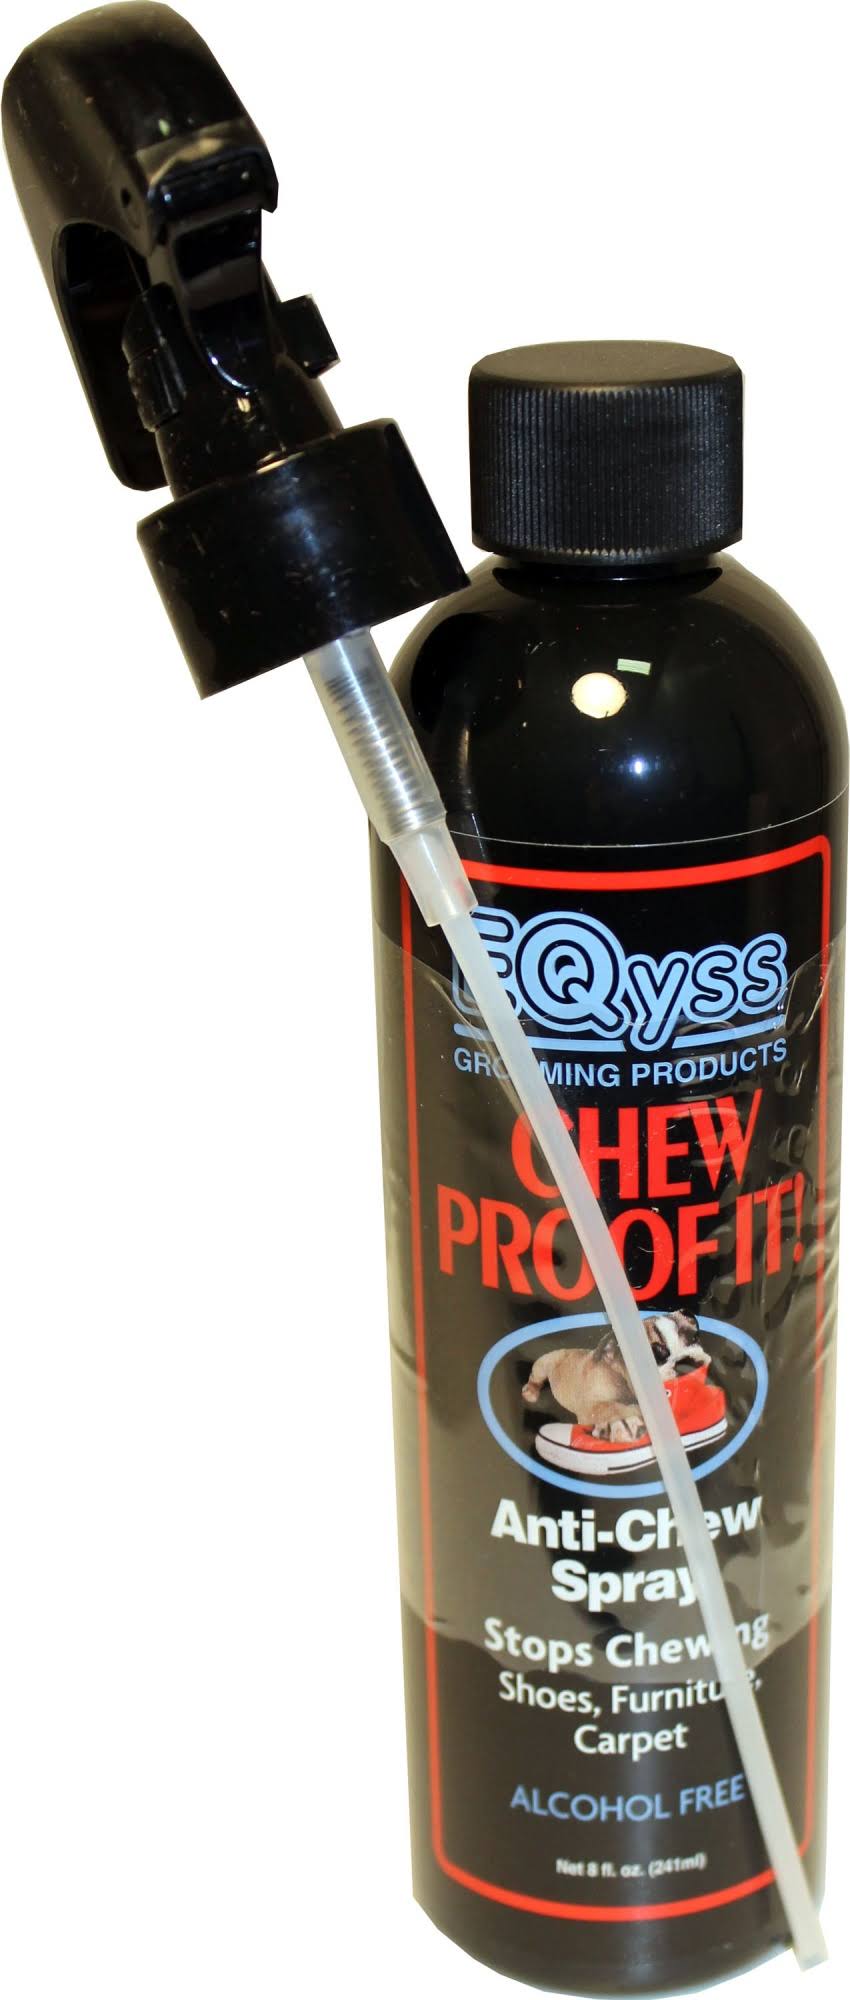 Eqyss Grooming Chew Proof It Anti-Chew Pet Spray 8 oz